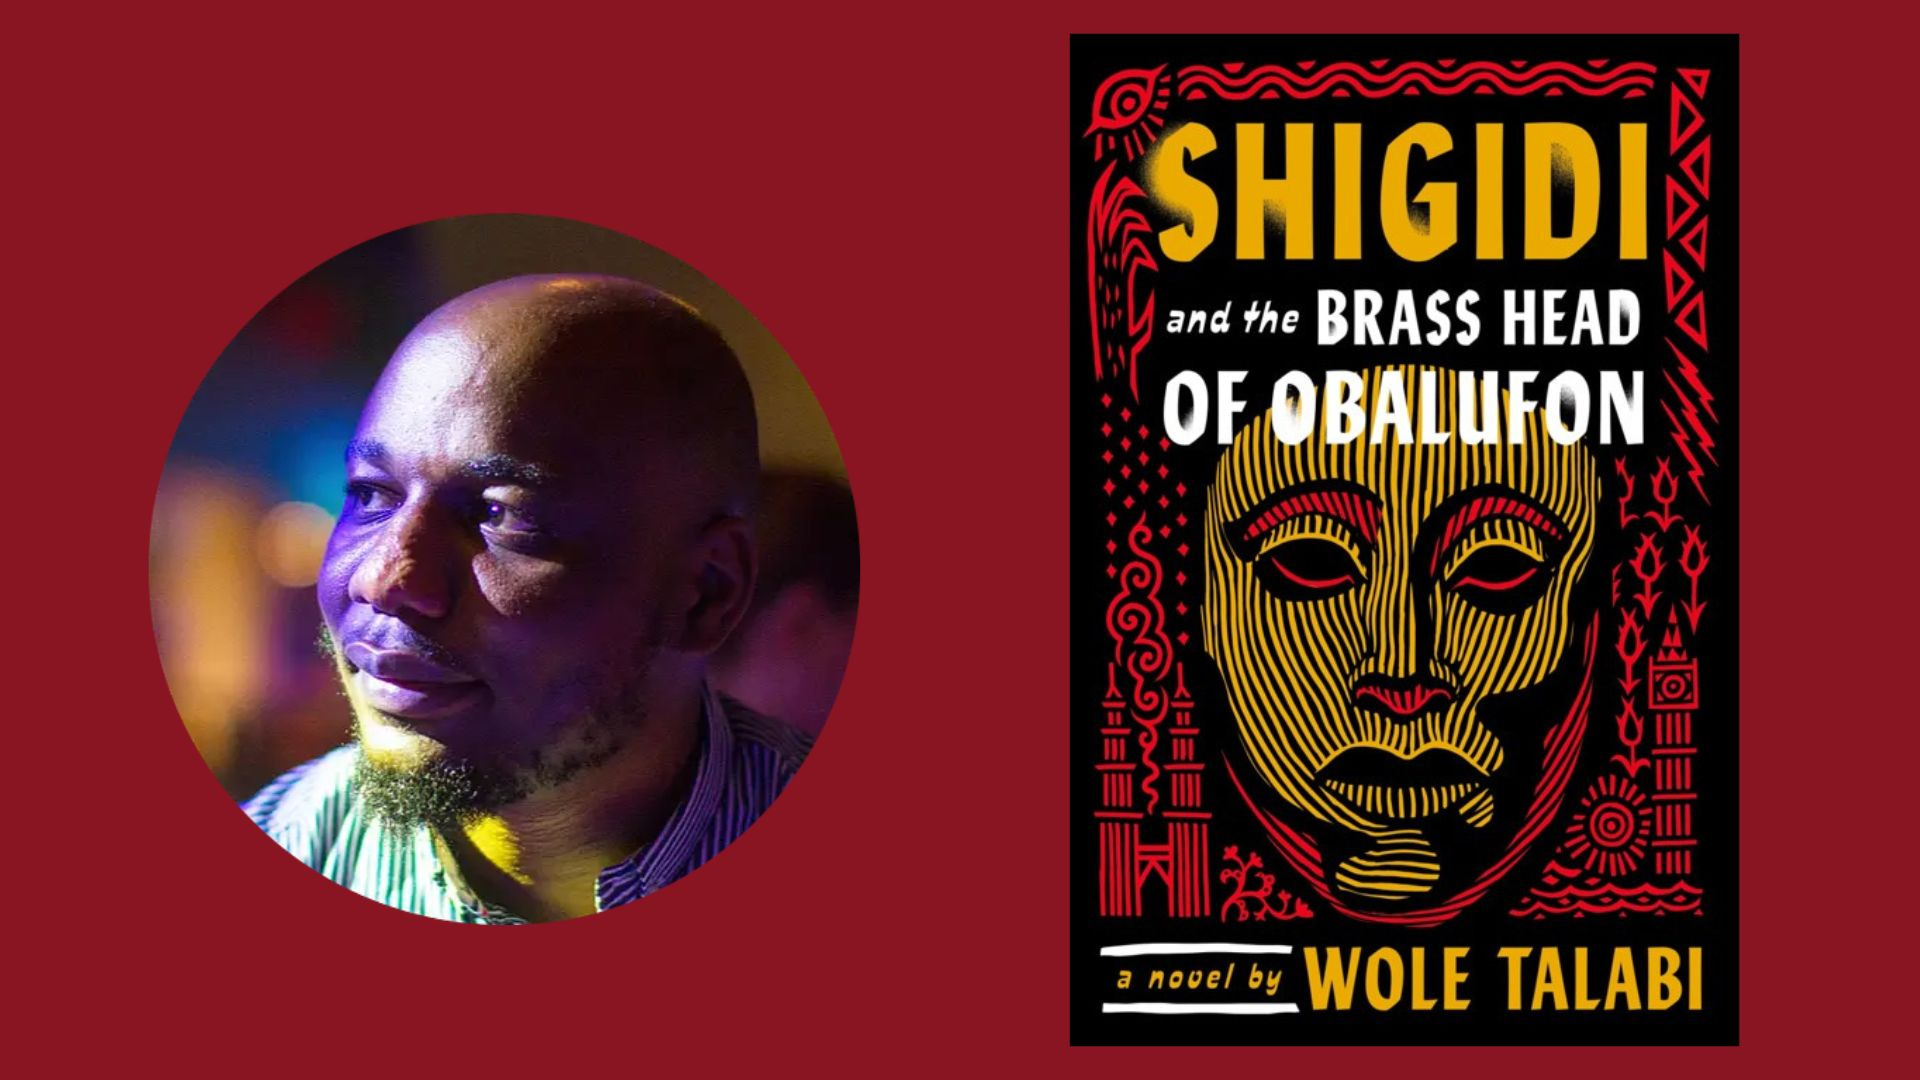 Nigerian Speculative Fiction Writer Wole Talabi Publishes Debut Novel: Shigidi and the Brass Head of Obalufon